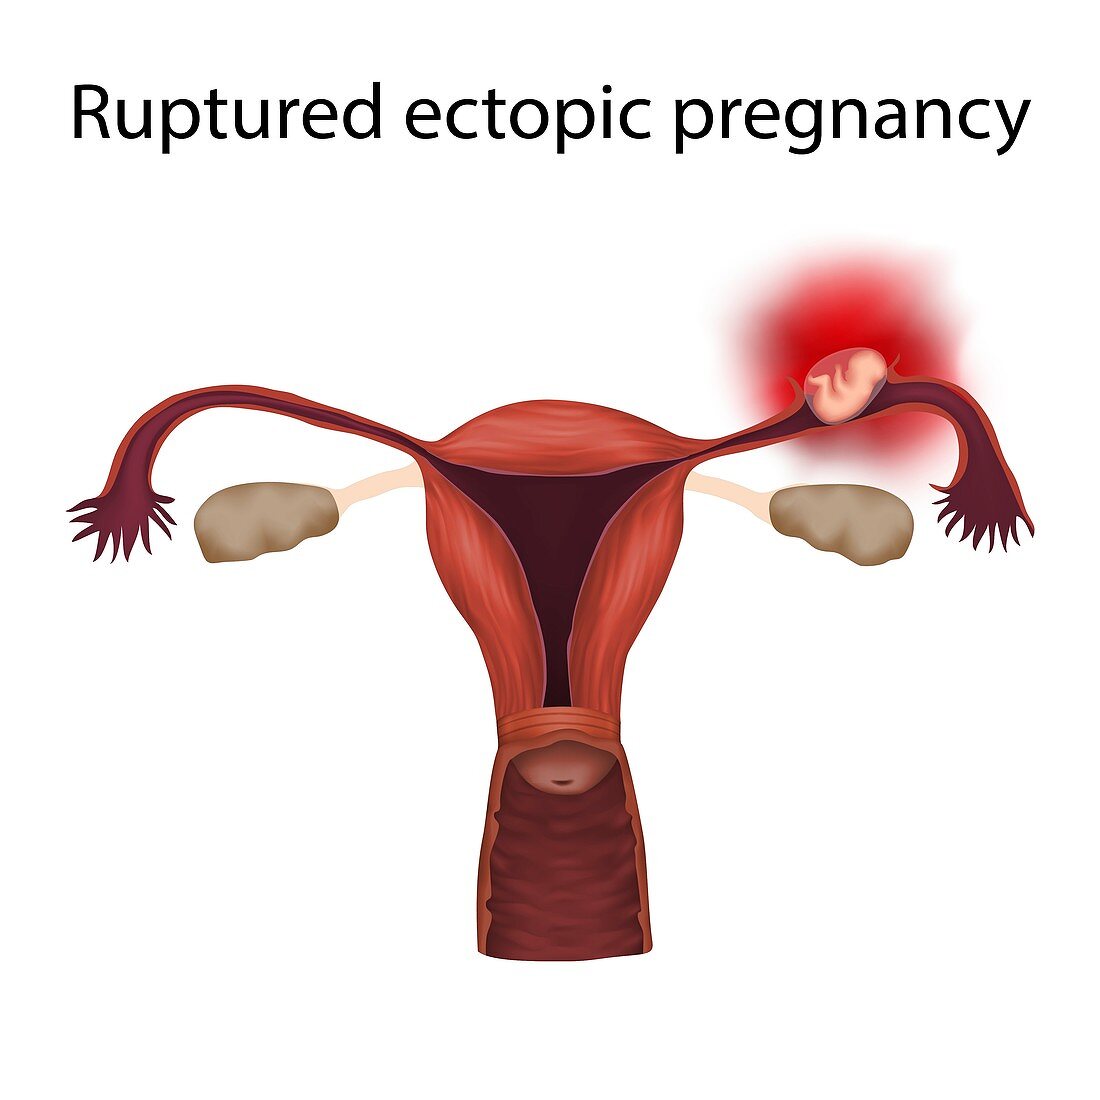 Ruptured ectopic pregnancy,illustration